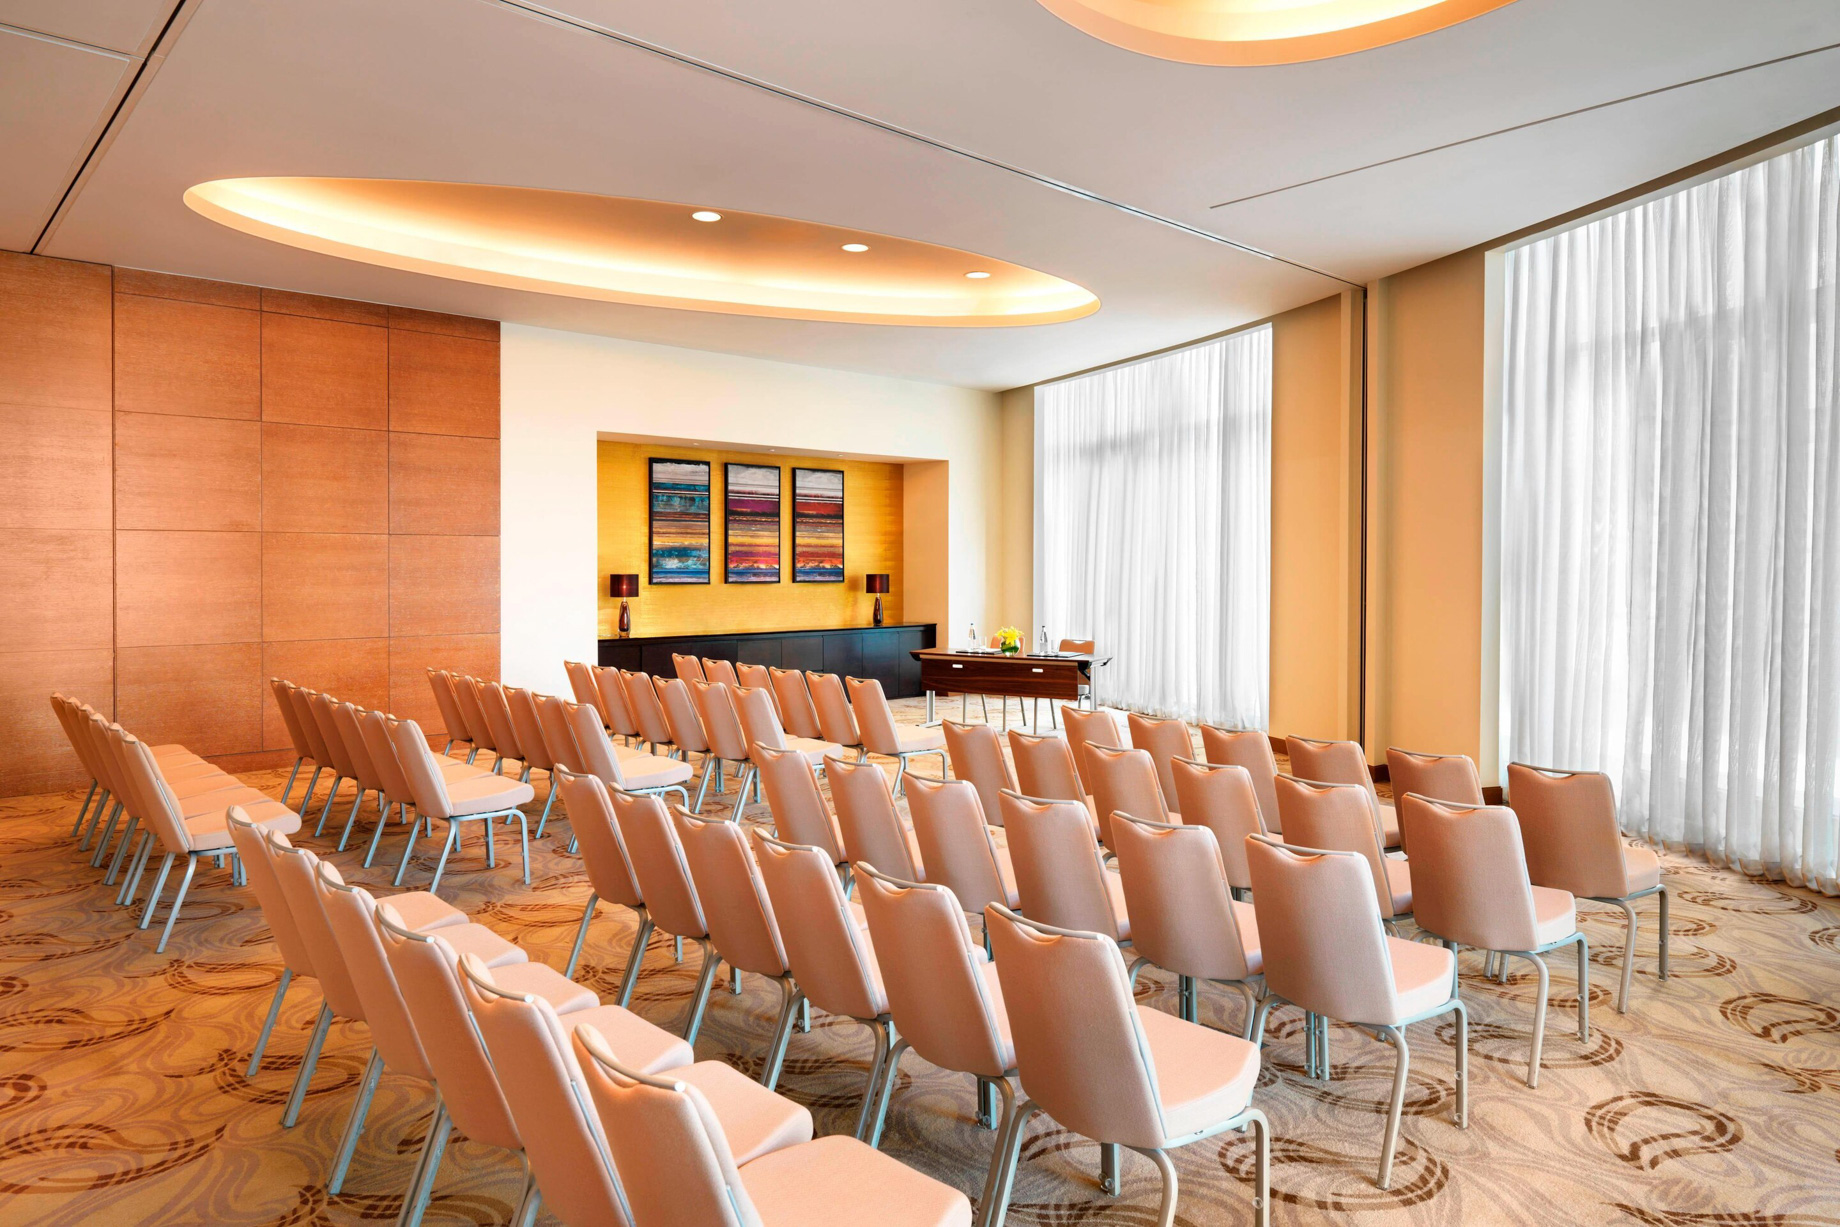 JW Marriott Absheron Baku Hotel – Baku, Azerbaijan – Khirdalan Meeting Room Theatre Setup